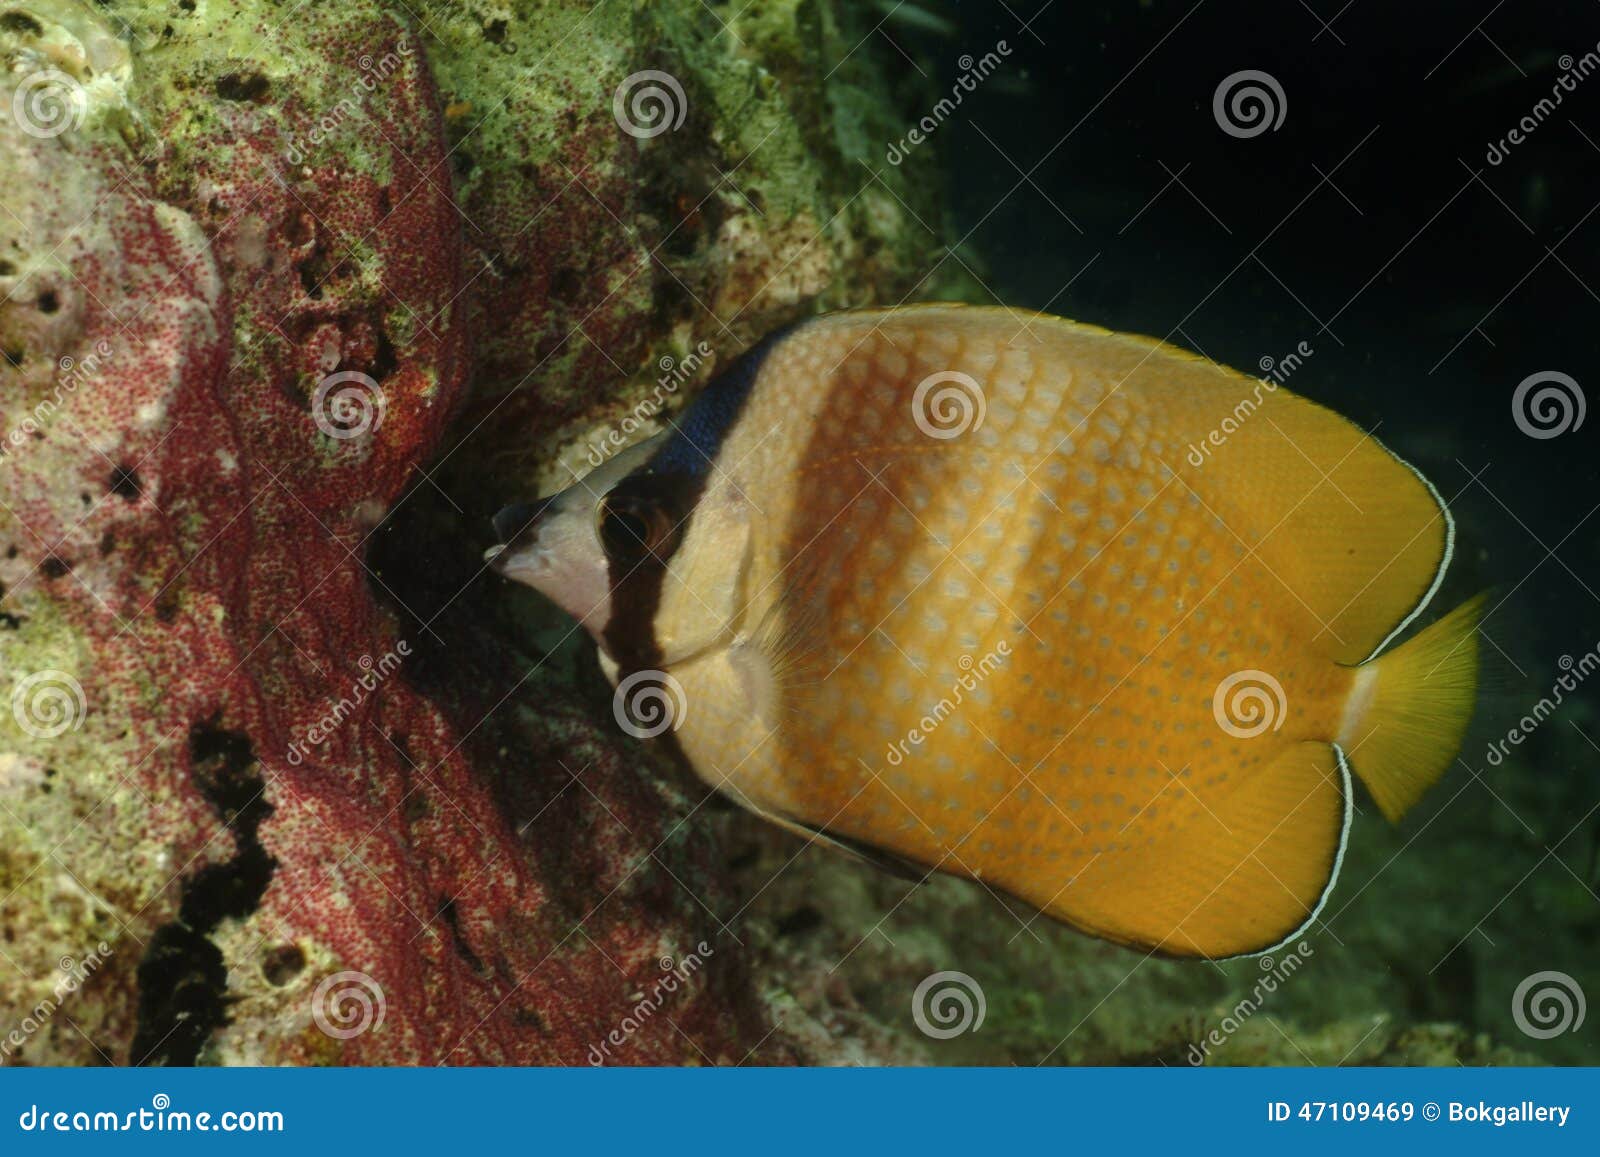 klein's butterflyfish, perhentian island, terengganu